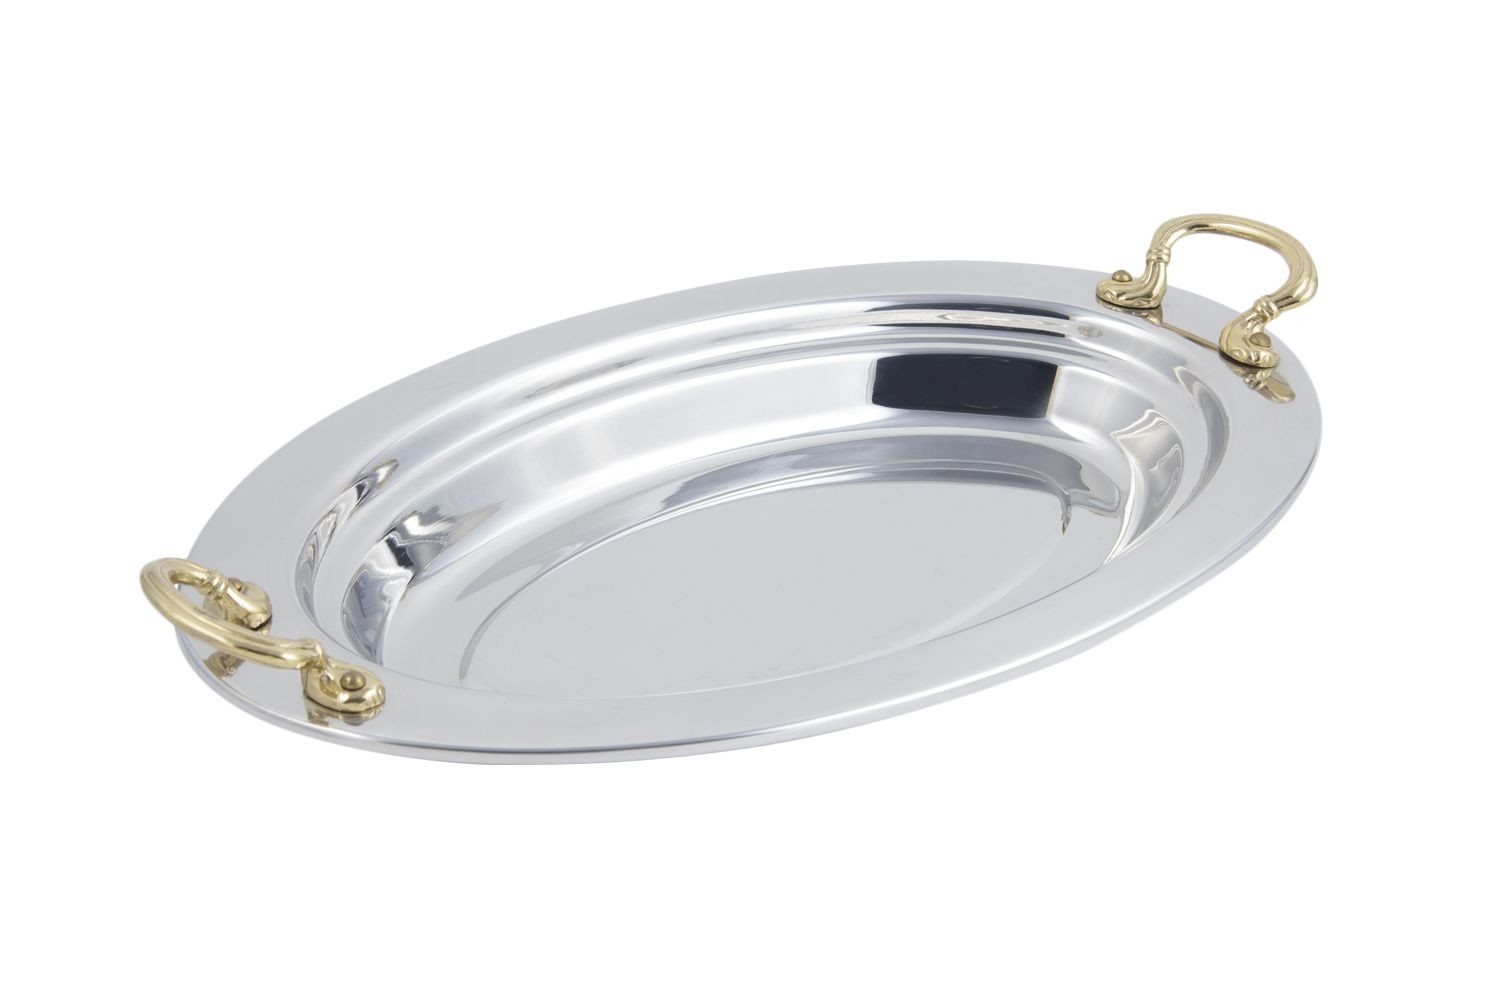 Bon Chef 5288HR Plain Design Oval Pan with Round Brass Handles, 2 1/2 Qt.